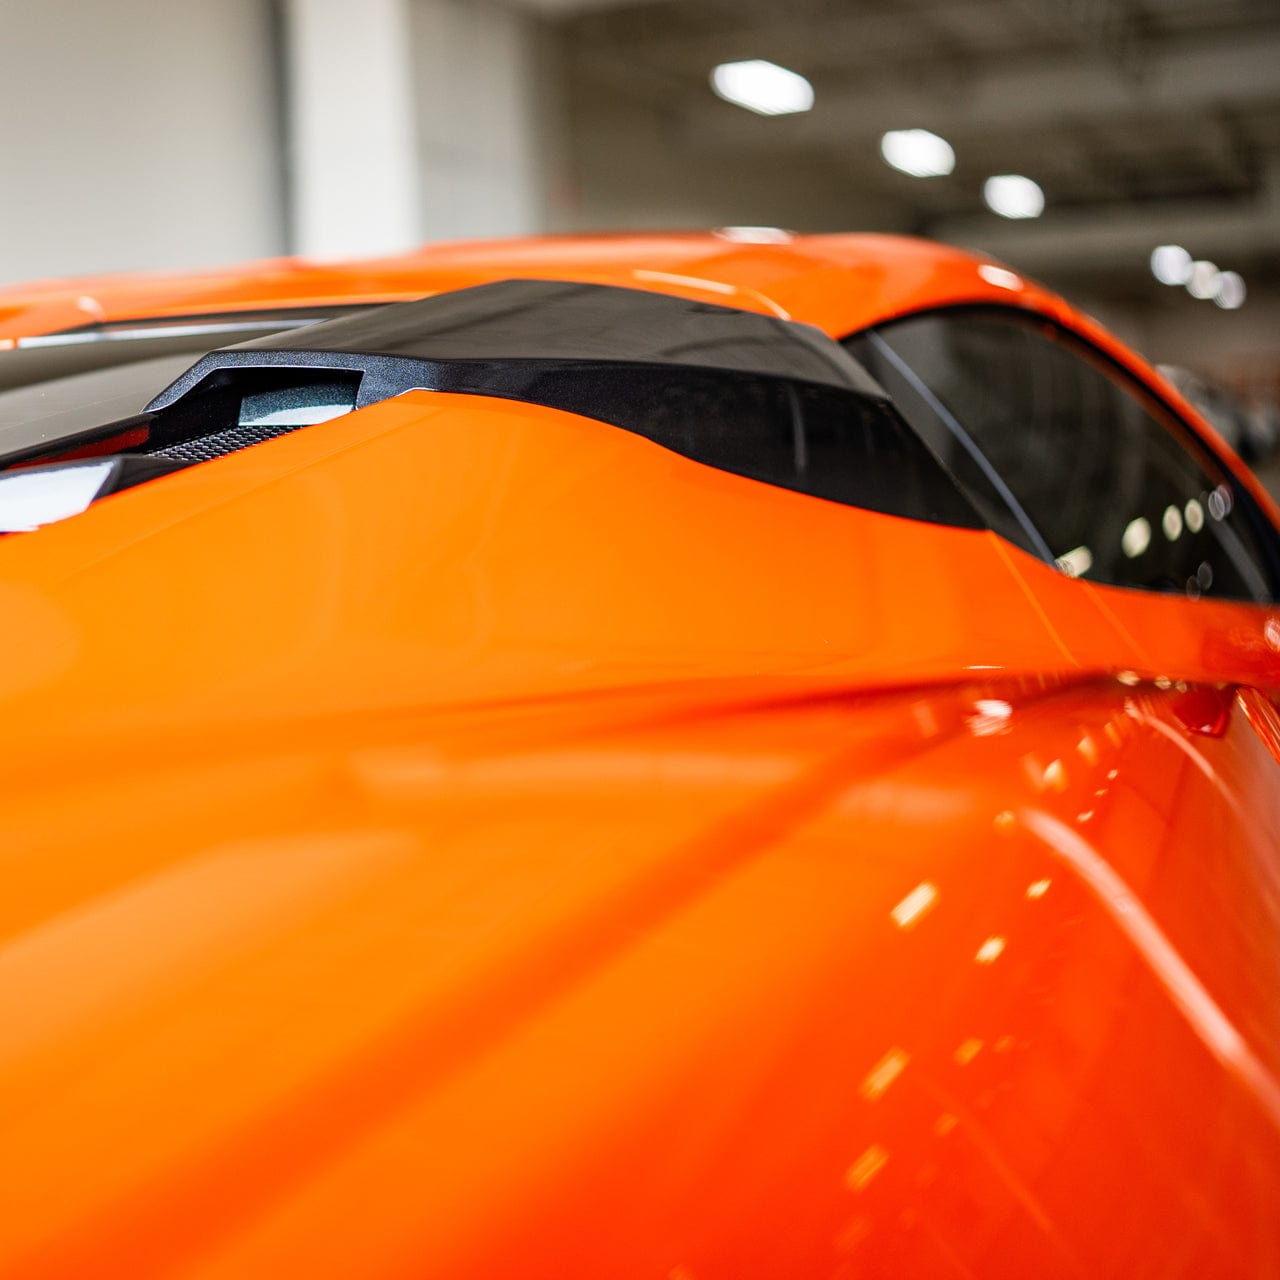 A rear view shot of a Carbon Flash Metallic Black ACS C8 RQ Intake Port installed on a Sebring Orange Corvette